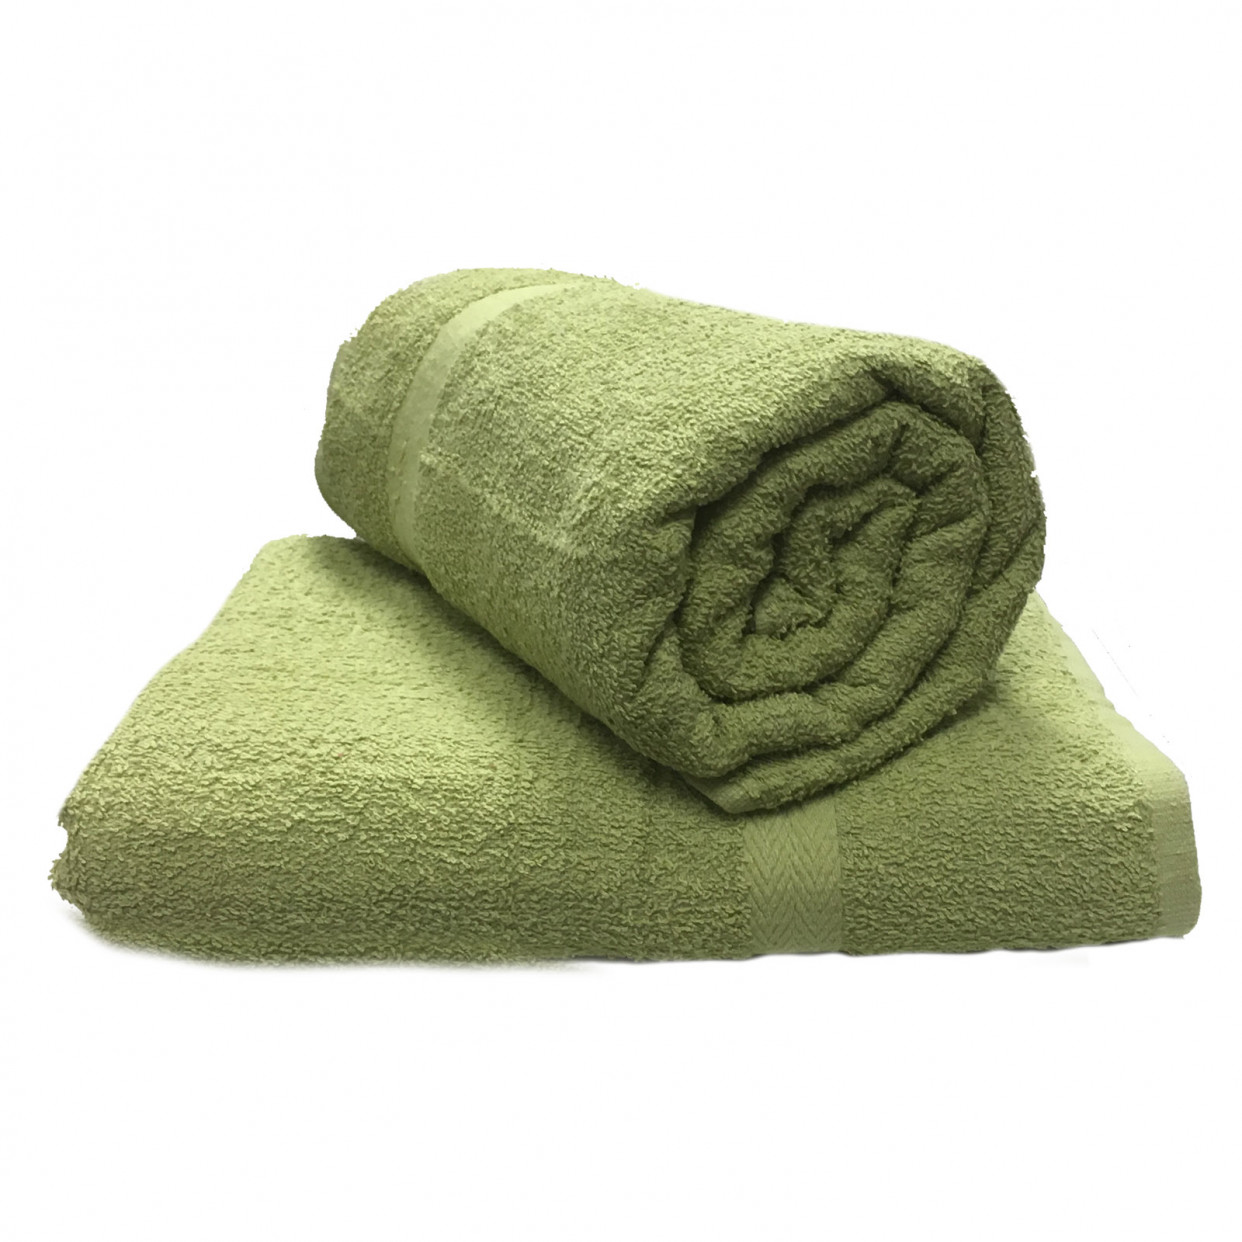 2 x Large Cotton Soft Bath Towel Sheets 90 x 140 cm - Olive Green>